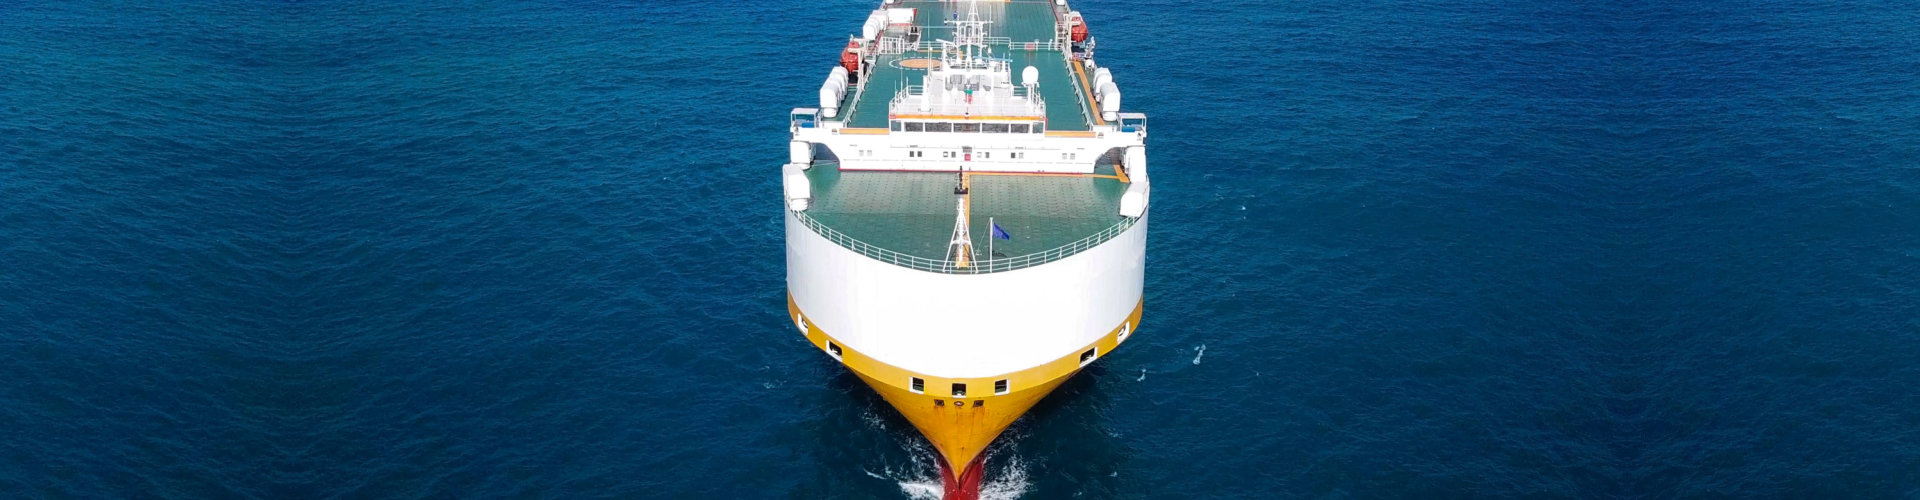 large roro vessel cruising the Mediterranean sea